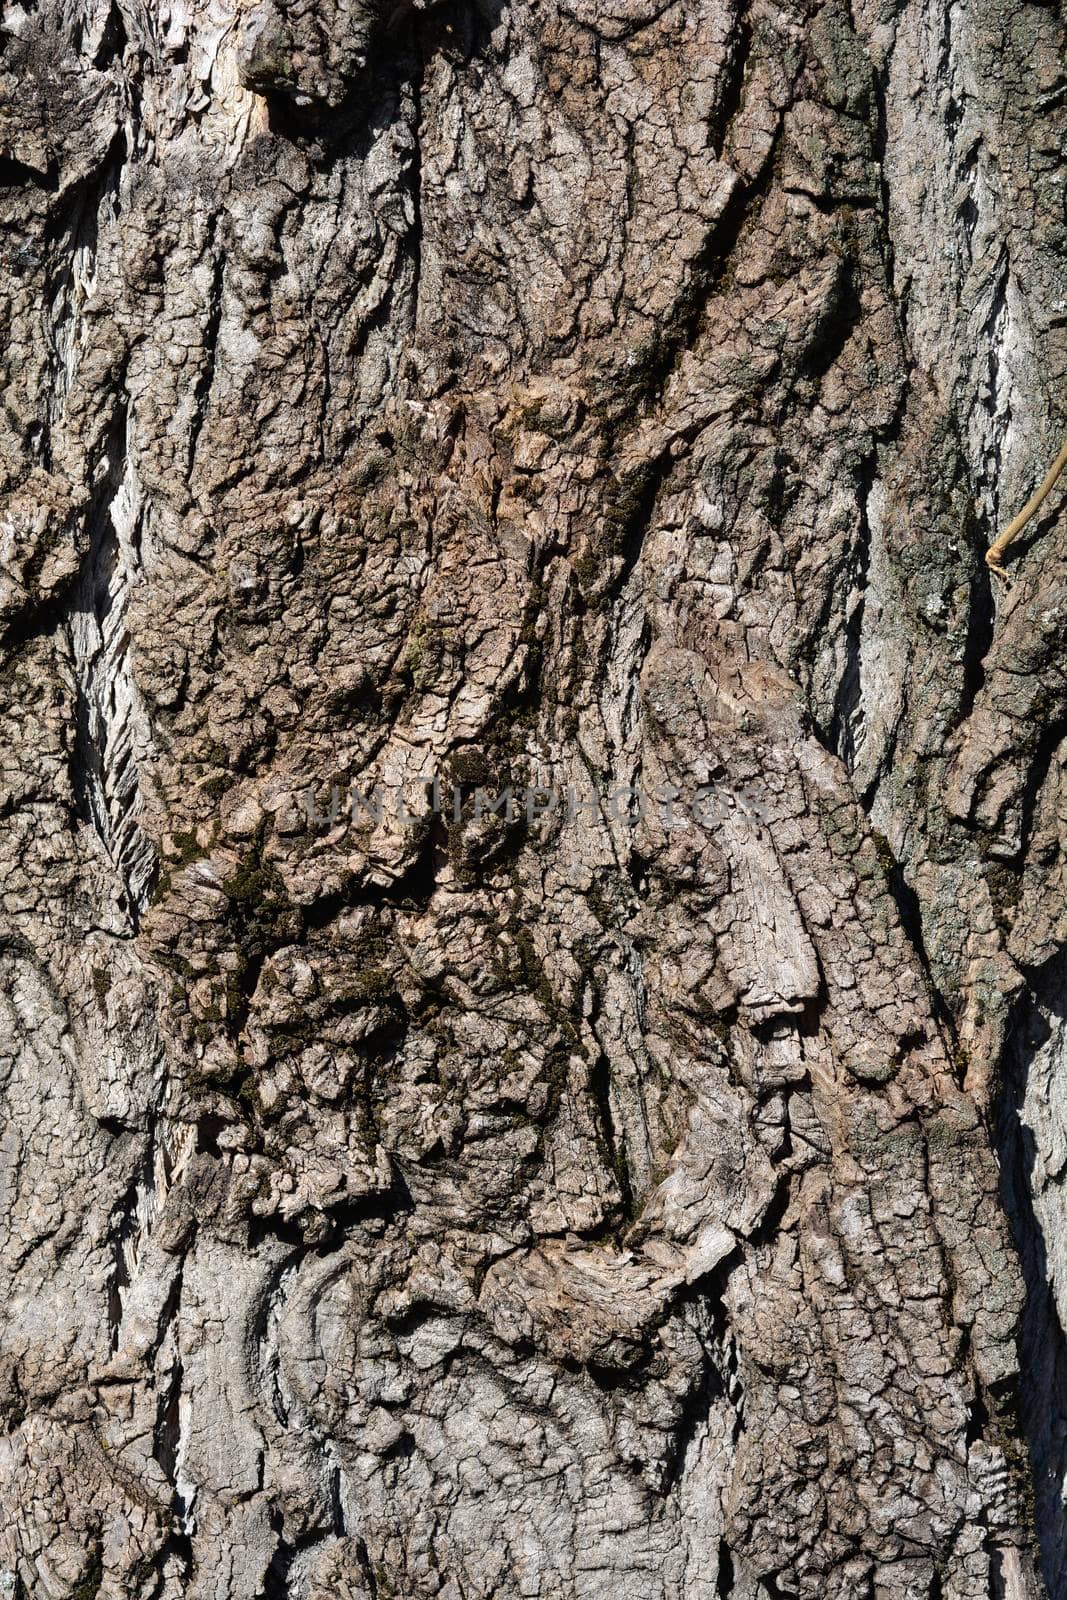 Lombardy poplar by nahhan